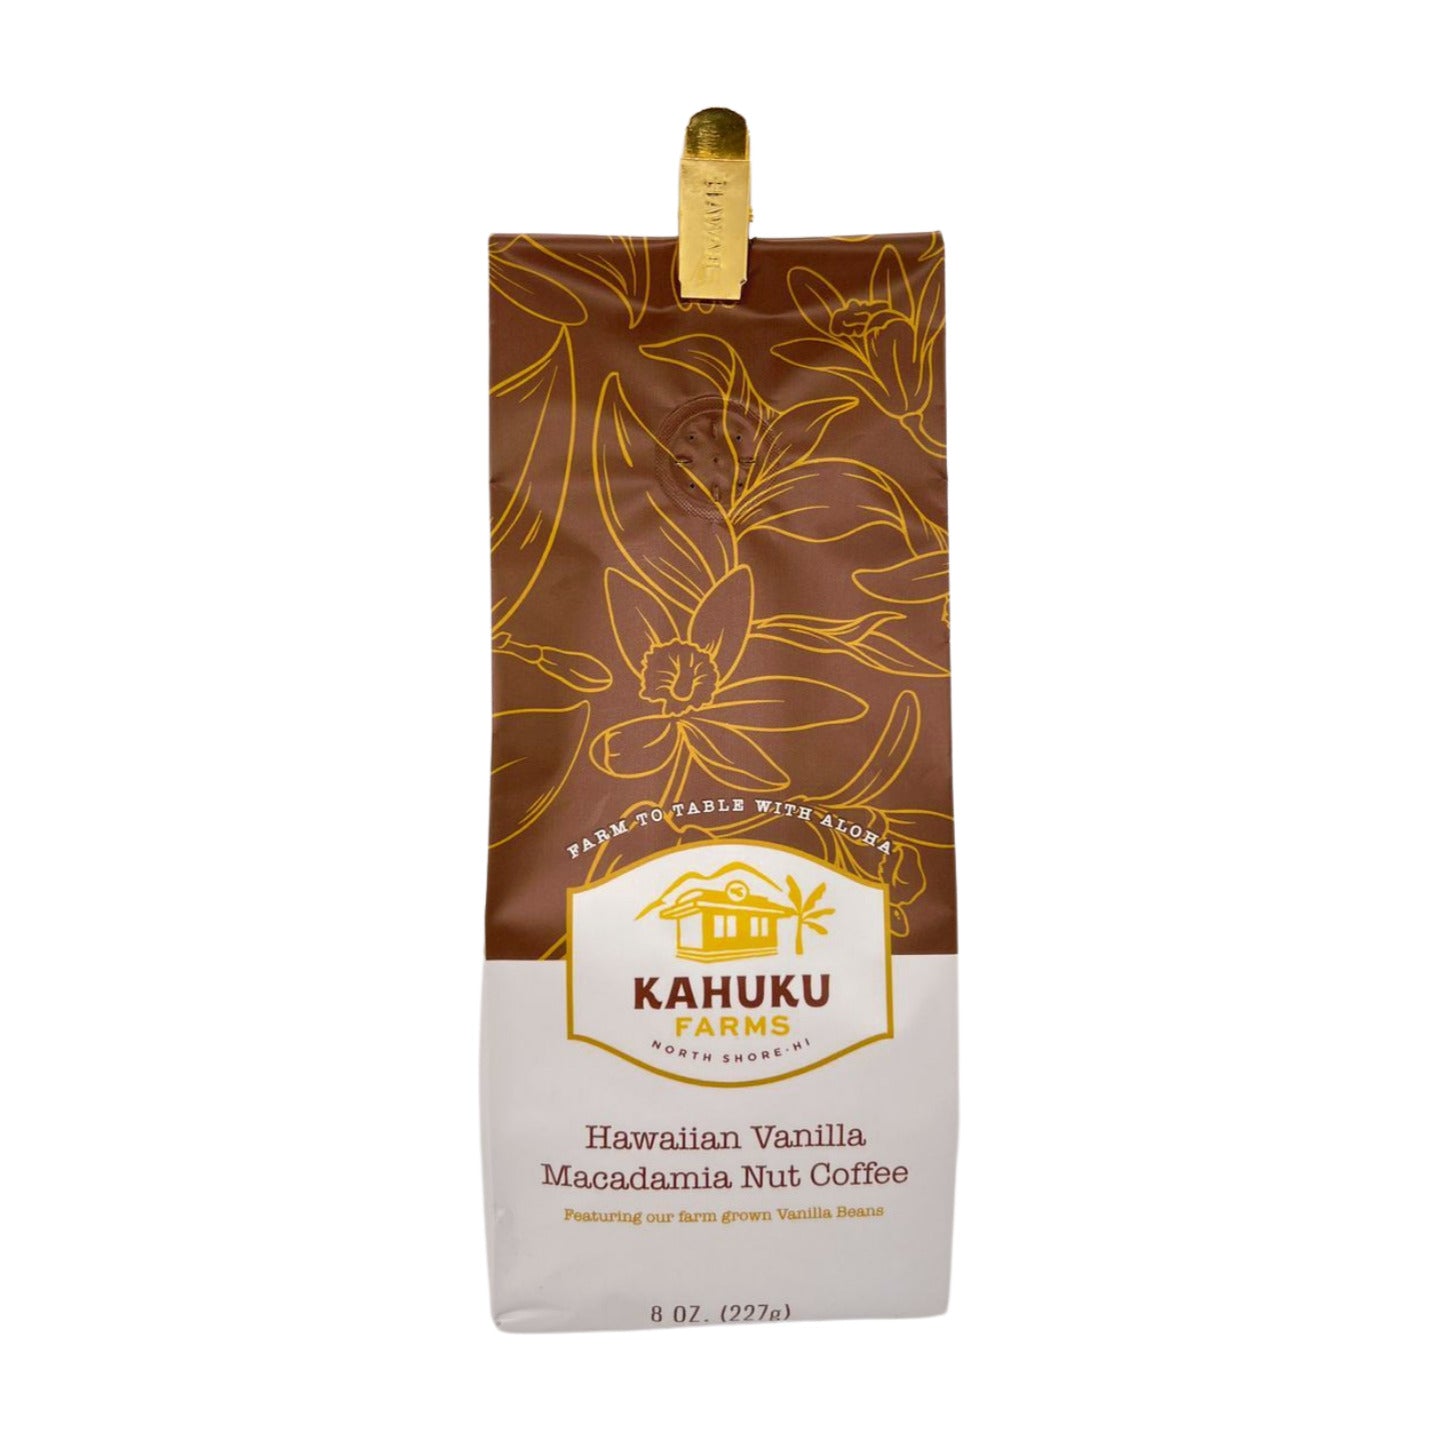 Pop-Up Mākeke - Kahuku Farms - Vanilla Macadamia Nut Coffee - Front View